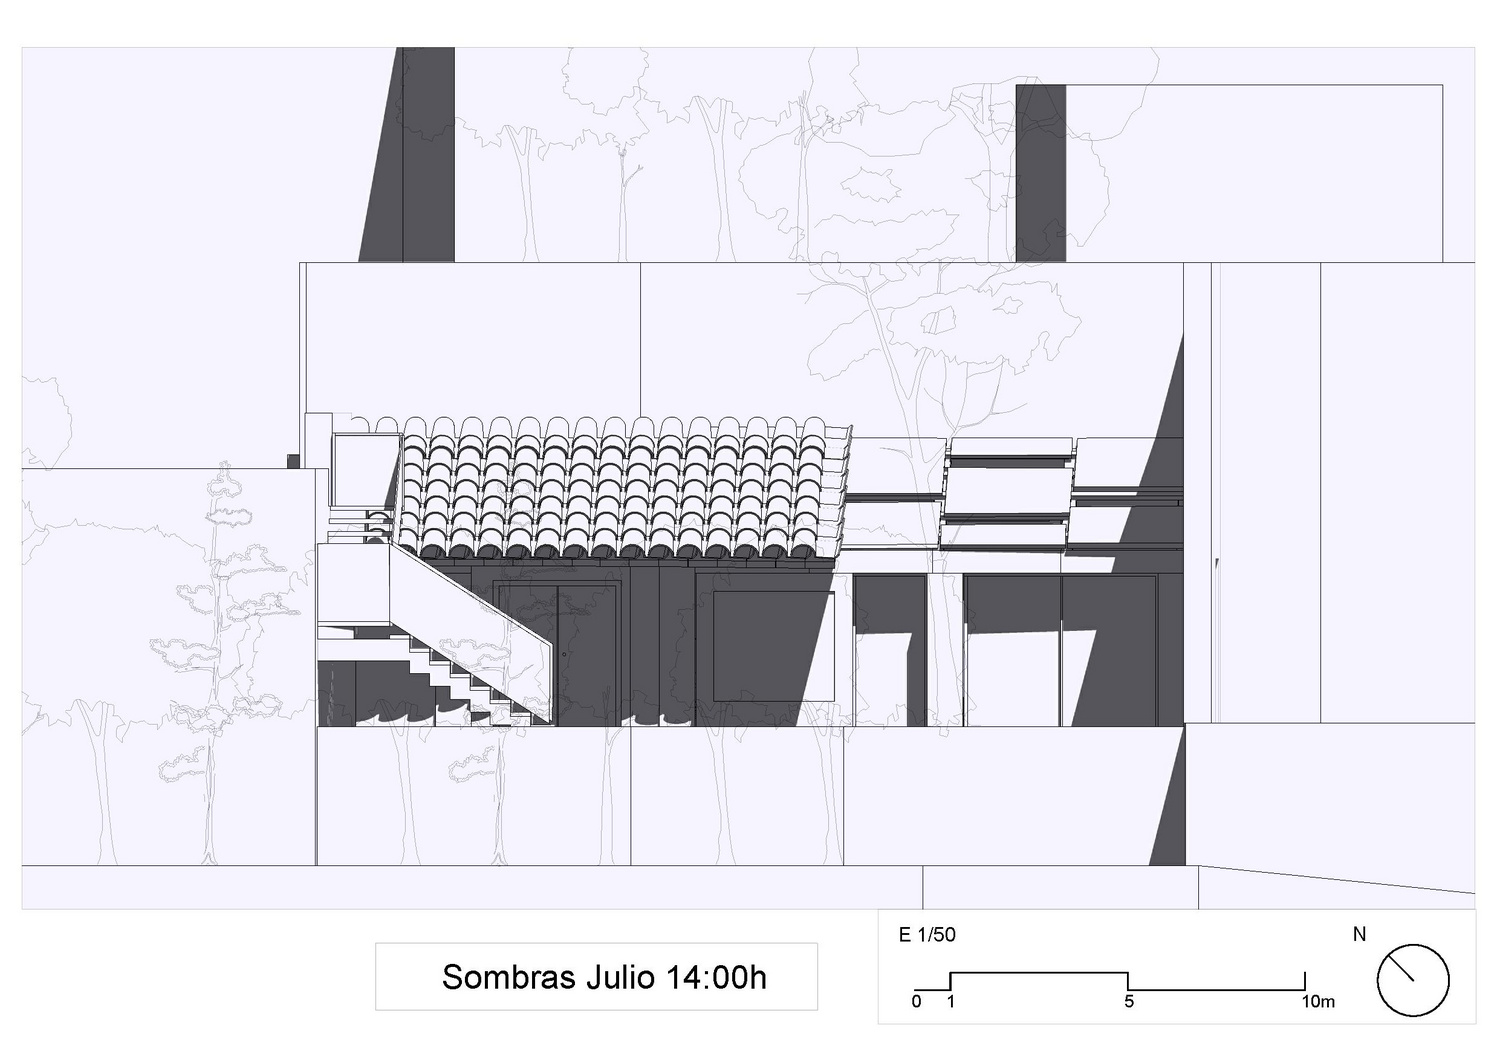 SOMBRAS EN JULIO 2 DE LA TARDE.pdf